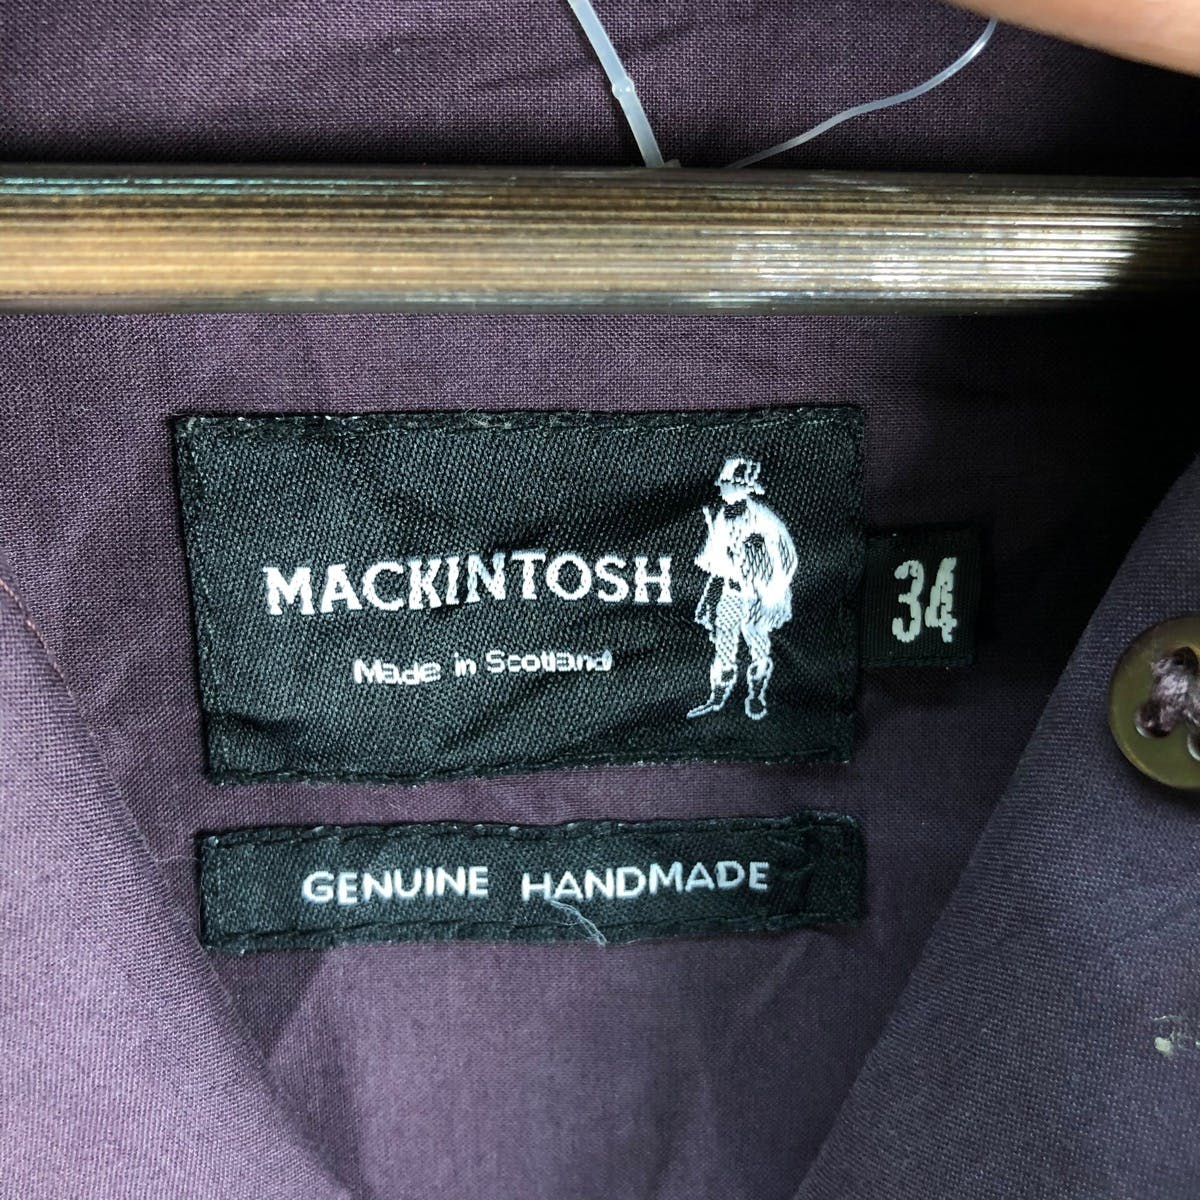 Vintage Mackintosh Trench Coat - 7